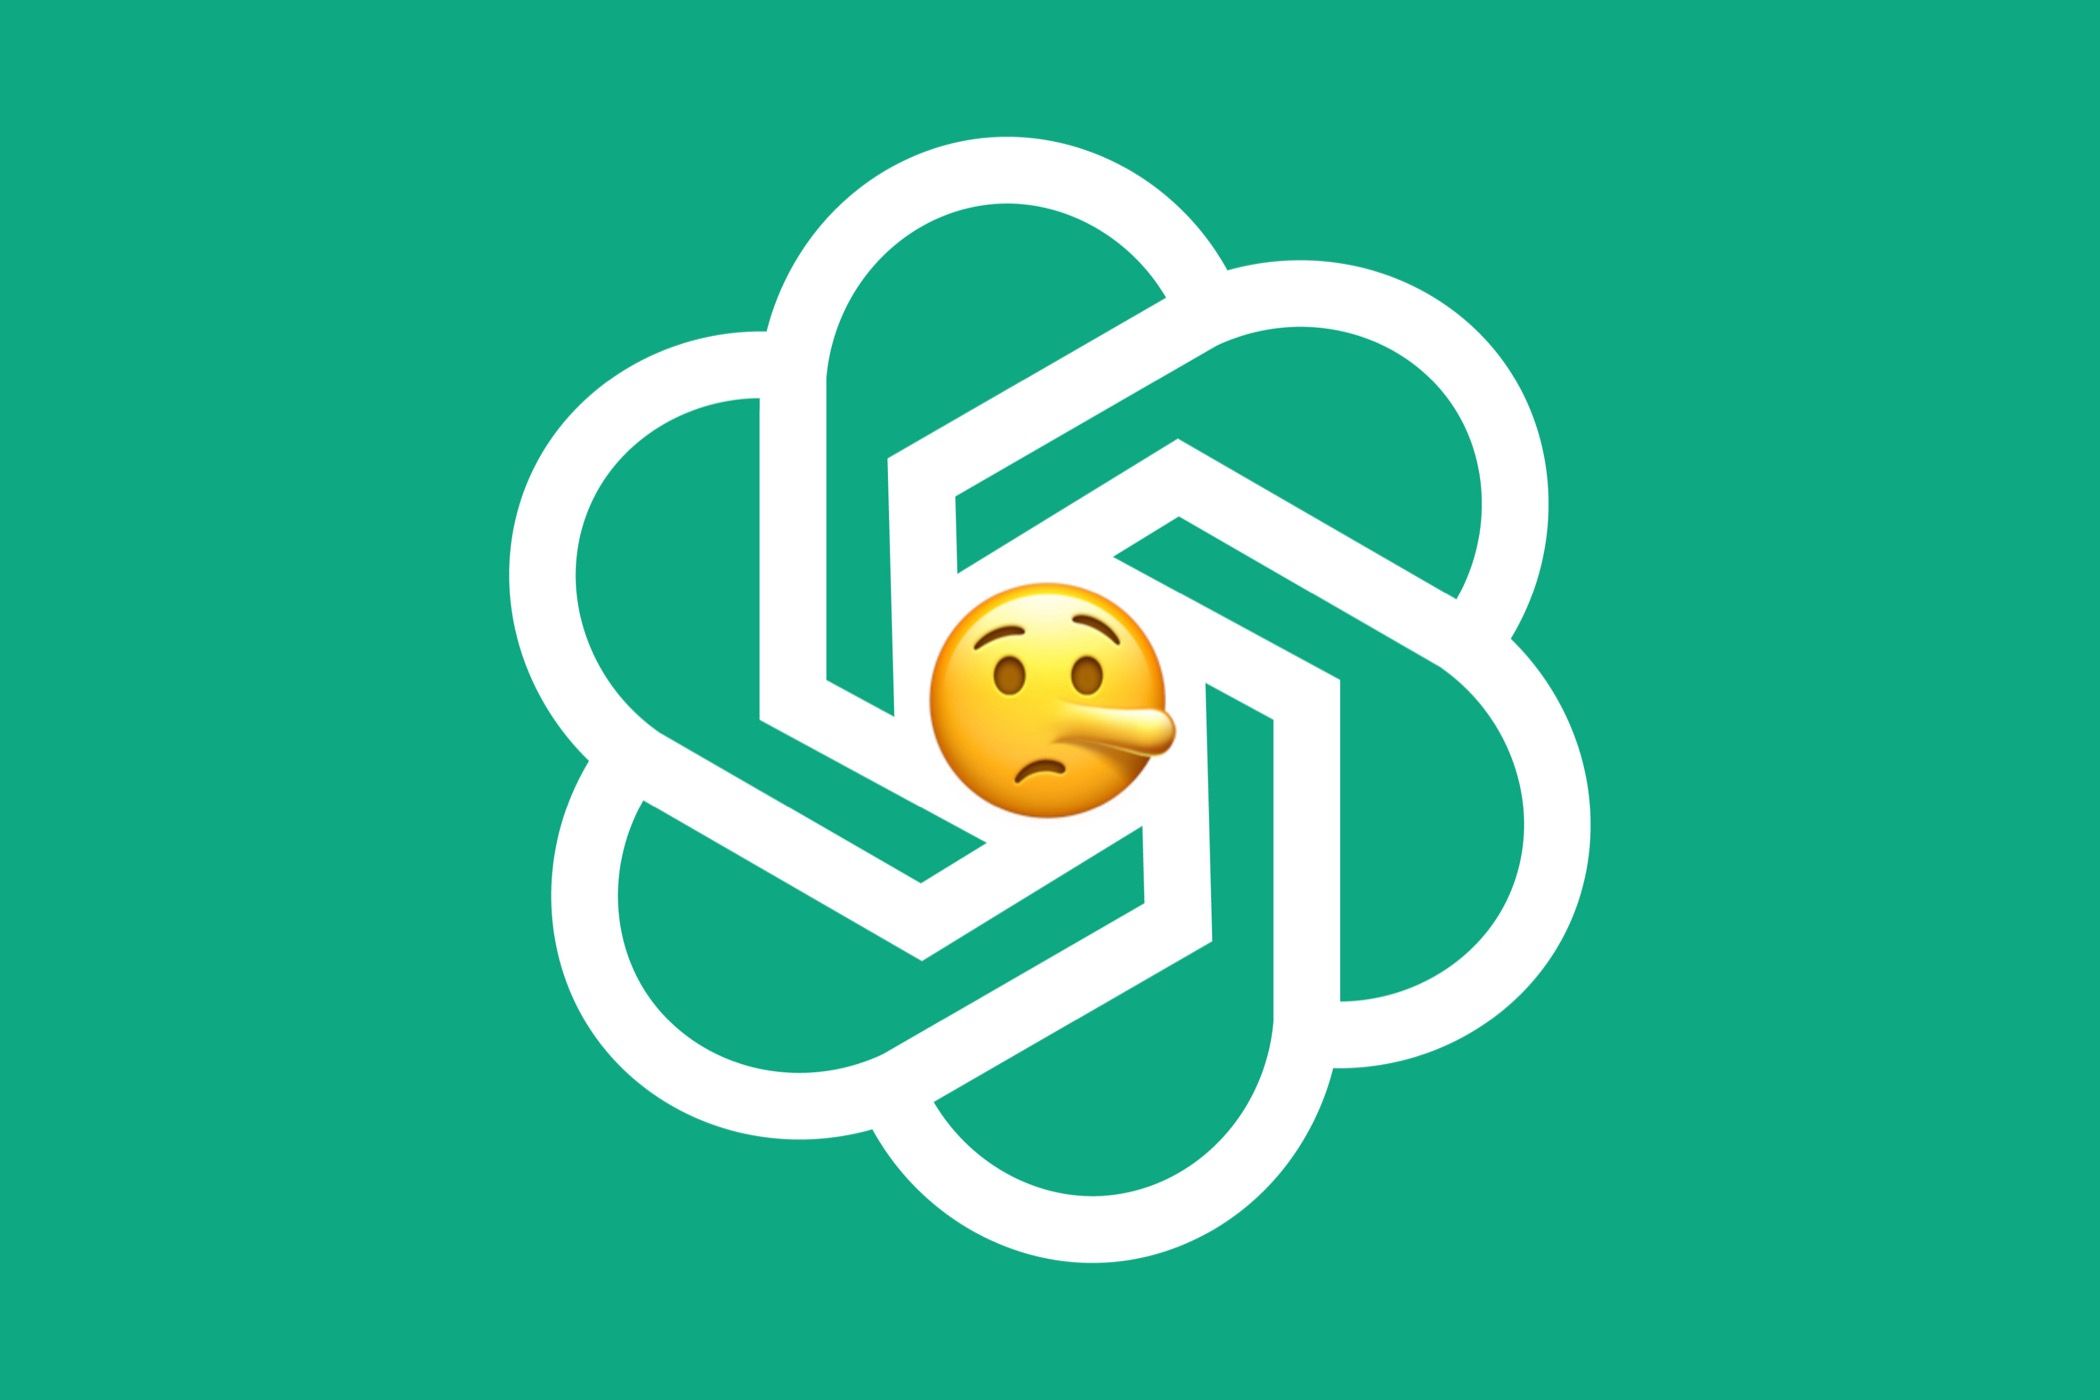 ChatGPT logo with a lying emoji